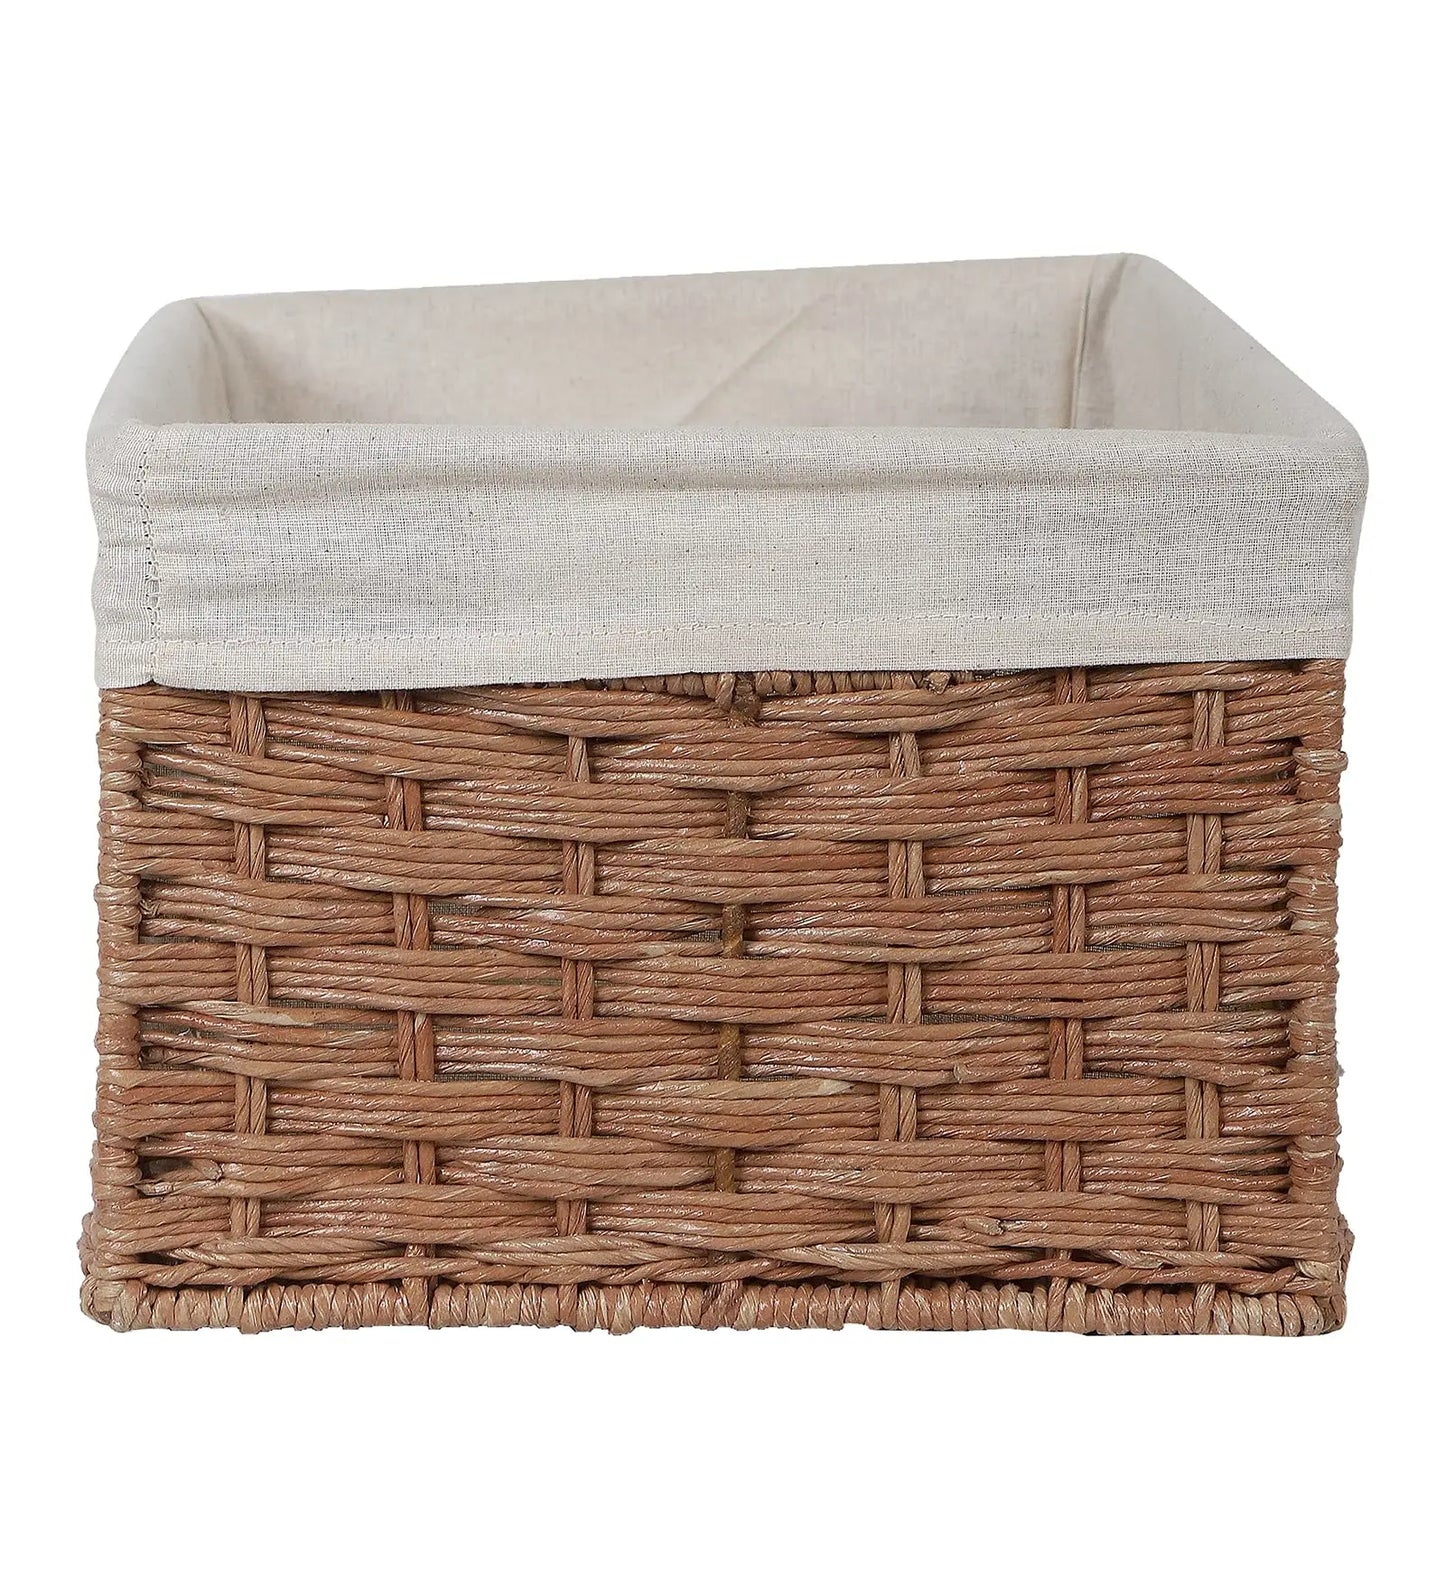 AKWAY Handcrafted Rectangular Wicker Basket for Cloths, Storage Basket, Bin Organizer for Toiletry Cosmetic Towels Toys Bathroom Organizer Bamboo Wicker Basket (15 L x 10 W x 7 H) (Teak Wood) Akway